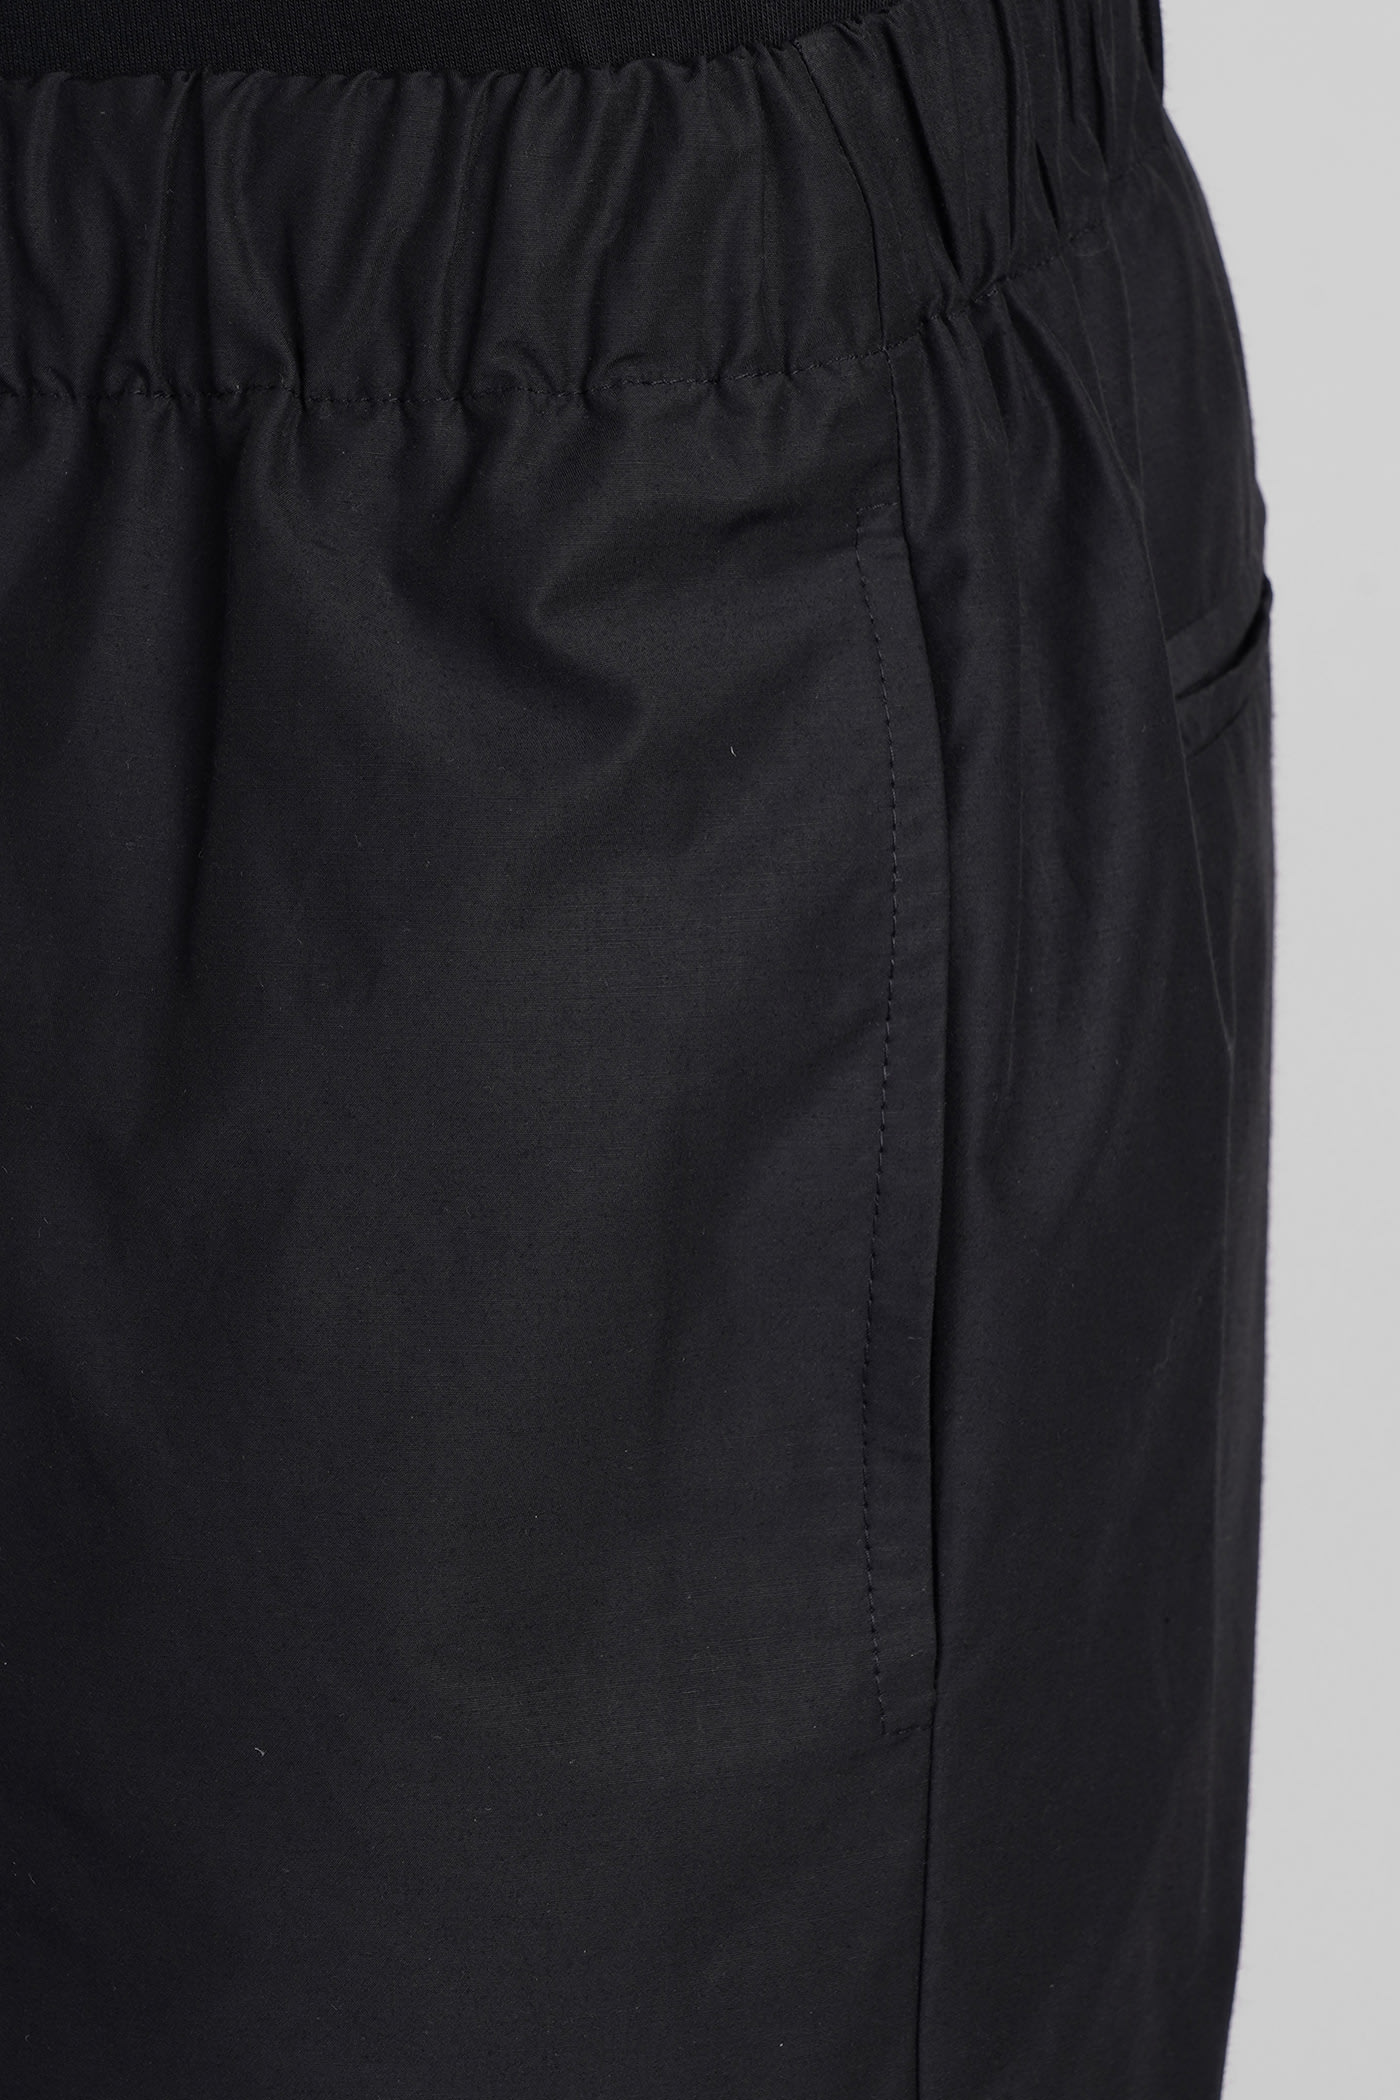 Shop Mauro Grifoni Shorts In Black Cotton